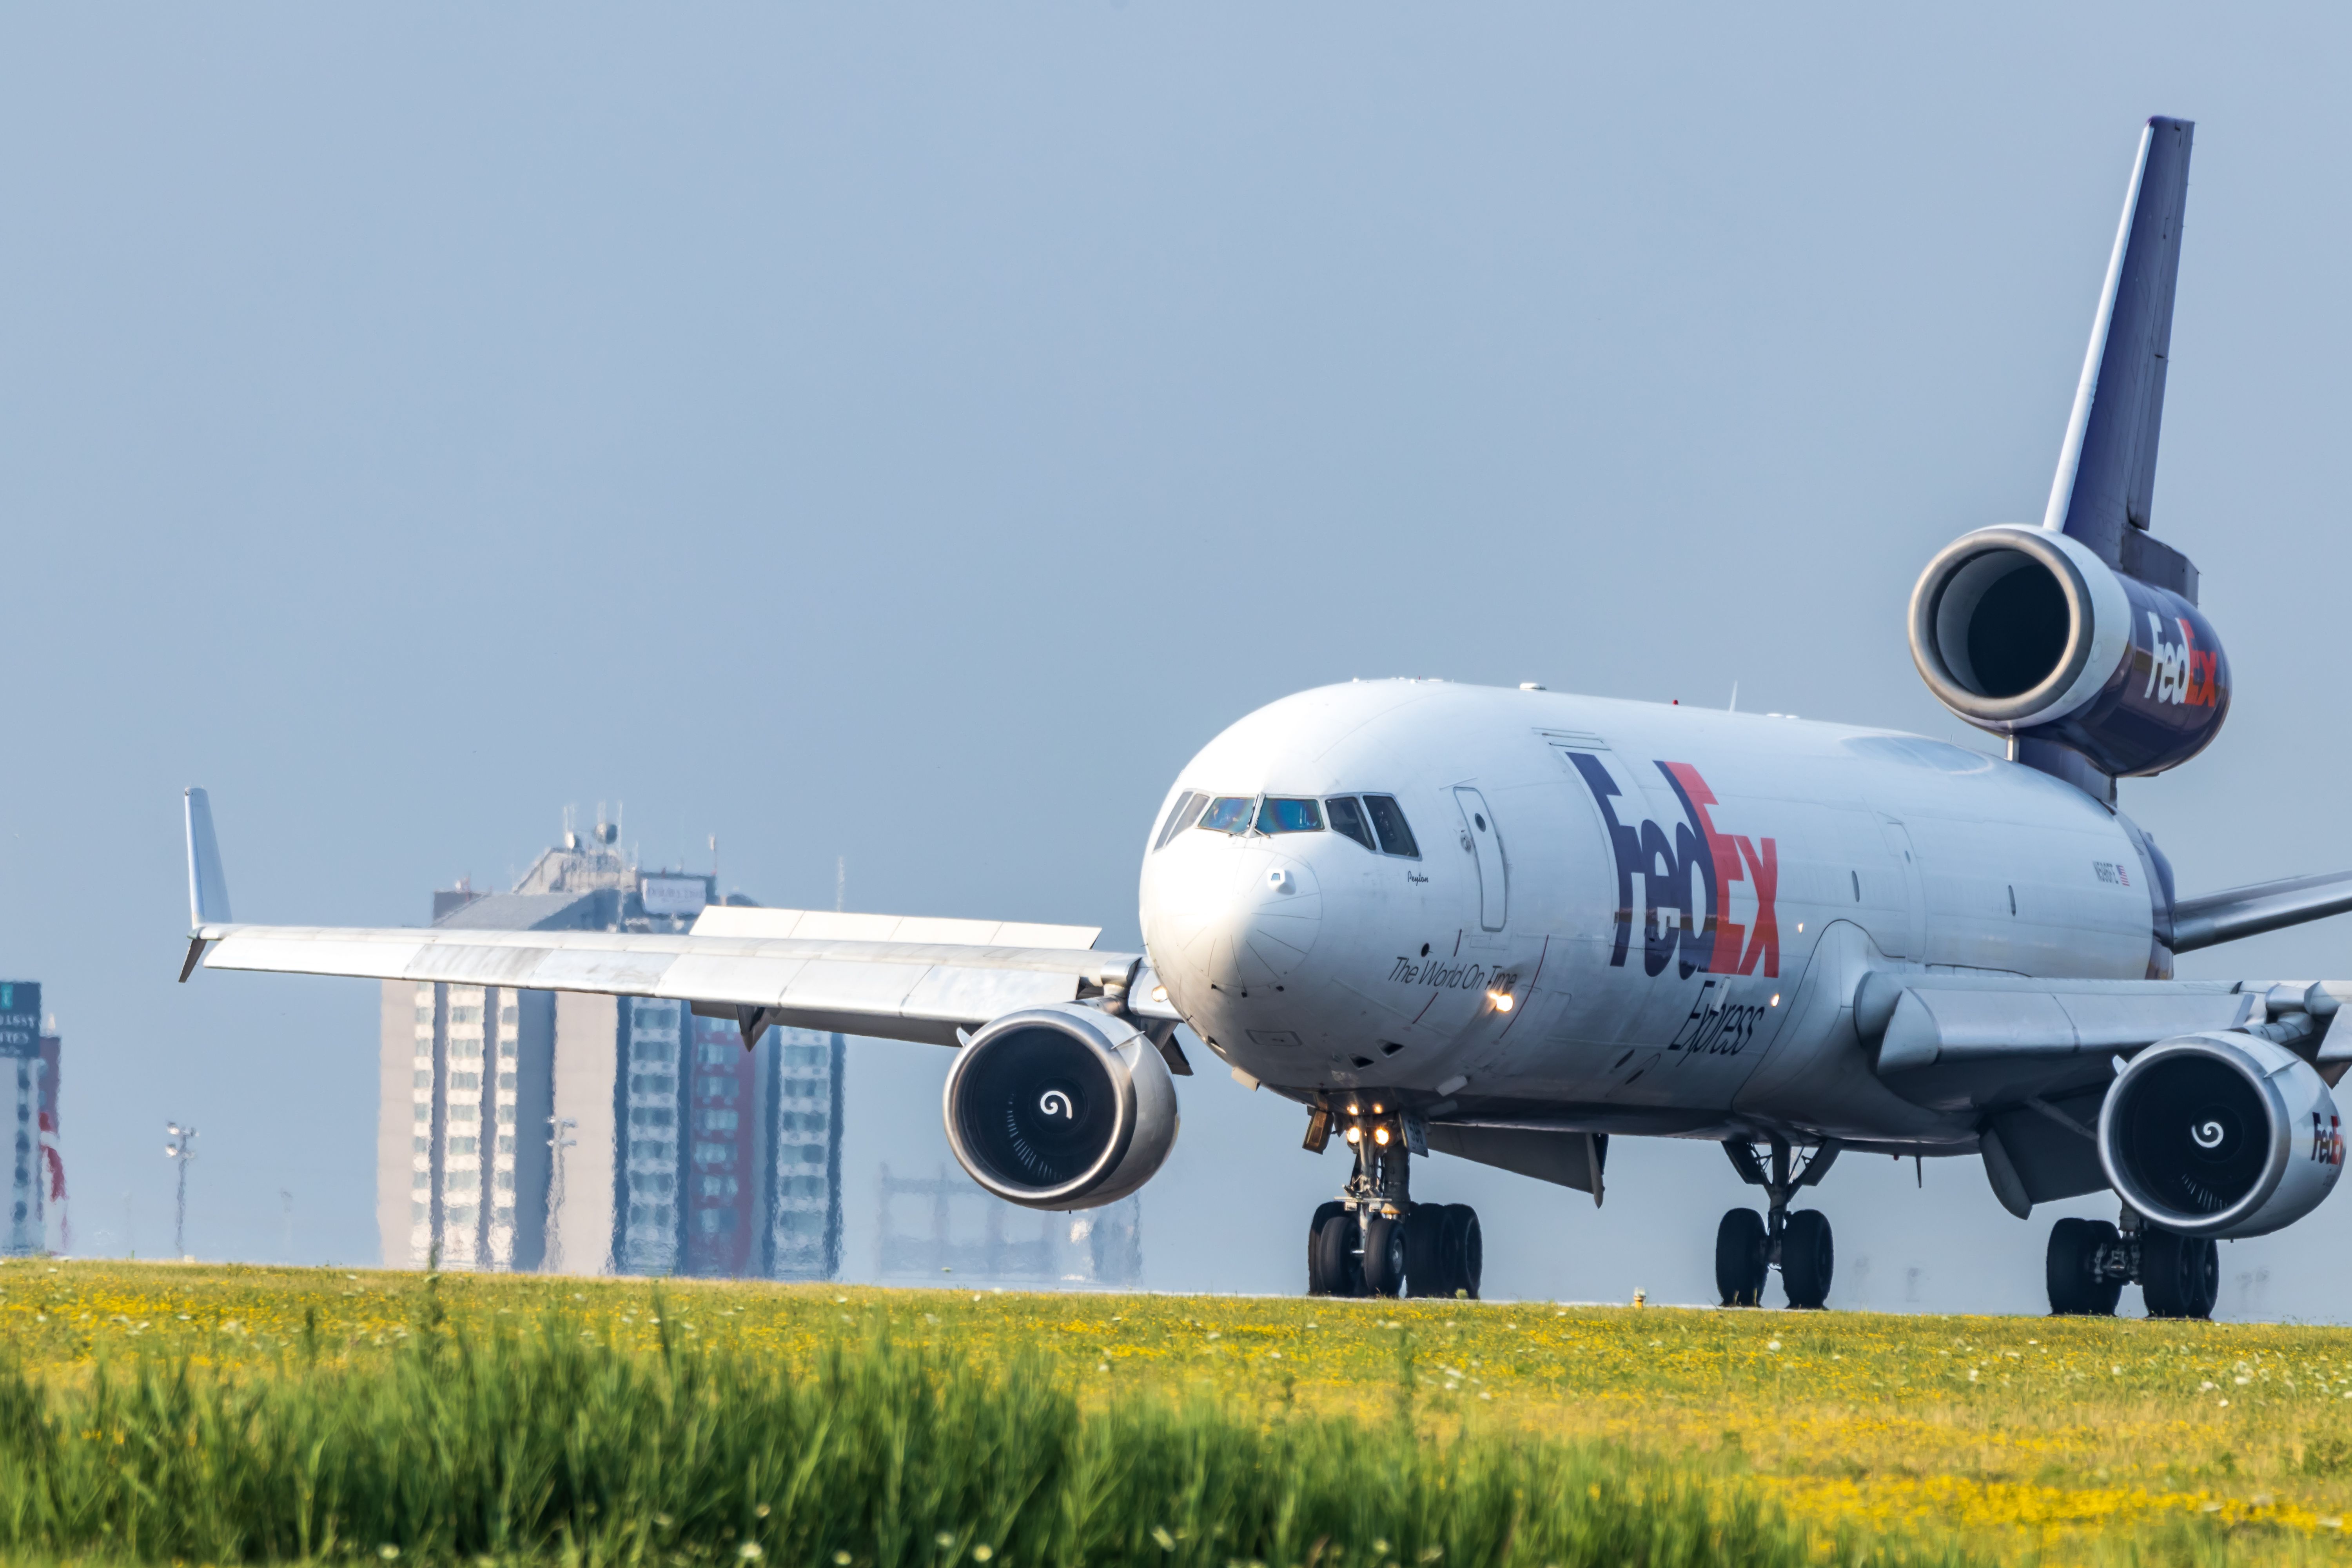 Fedex MD-11 seen braking after landing at Toronto Pearson Intl. Airport.